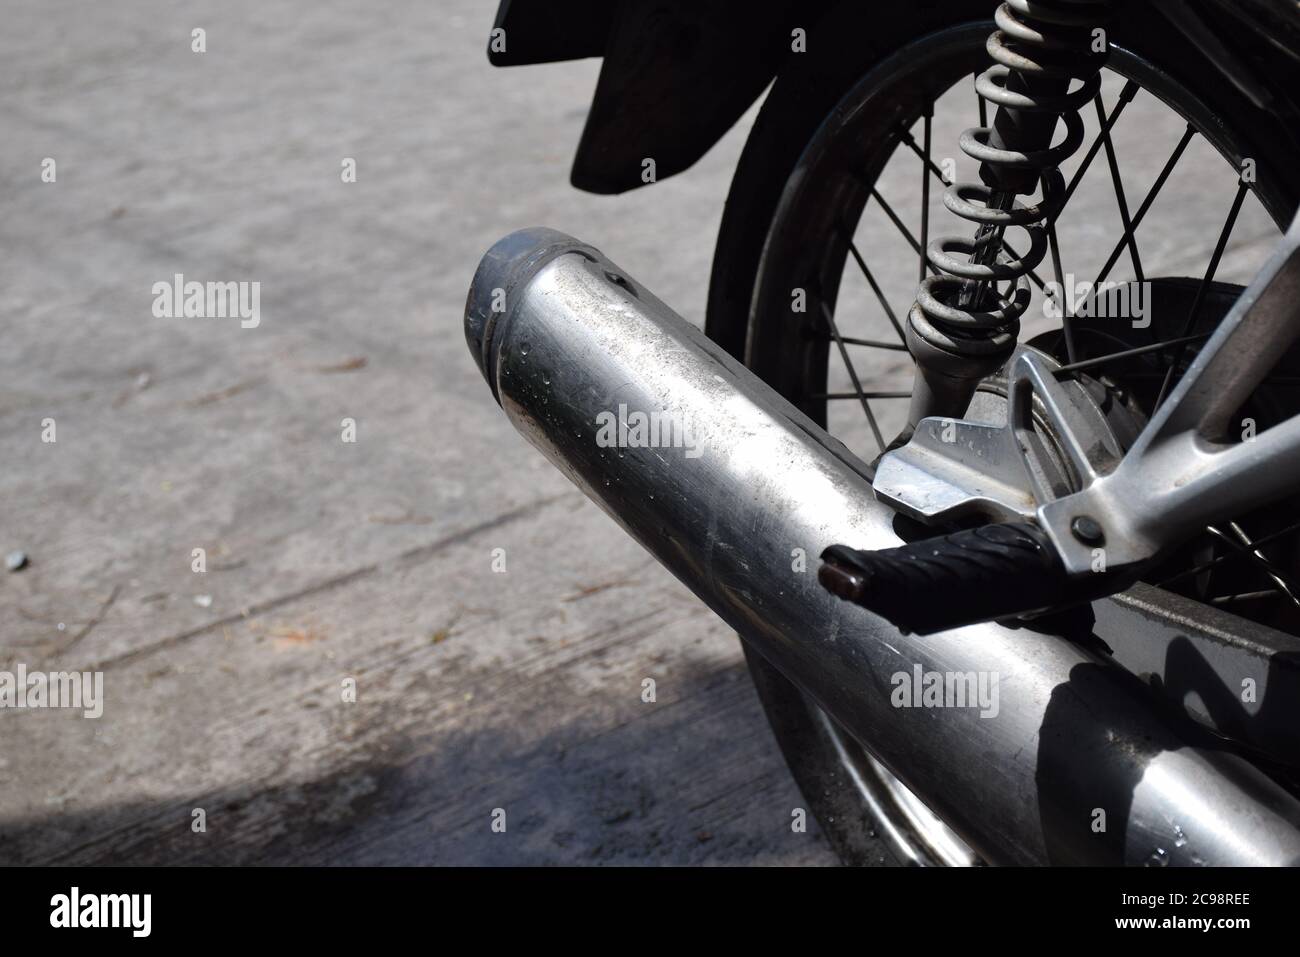 Motorcycle exhaust on Road Stock Photo